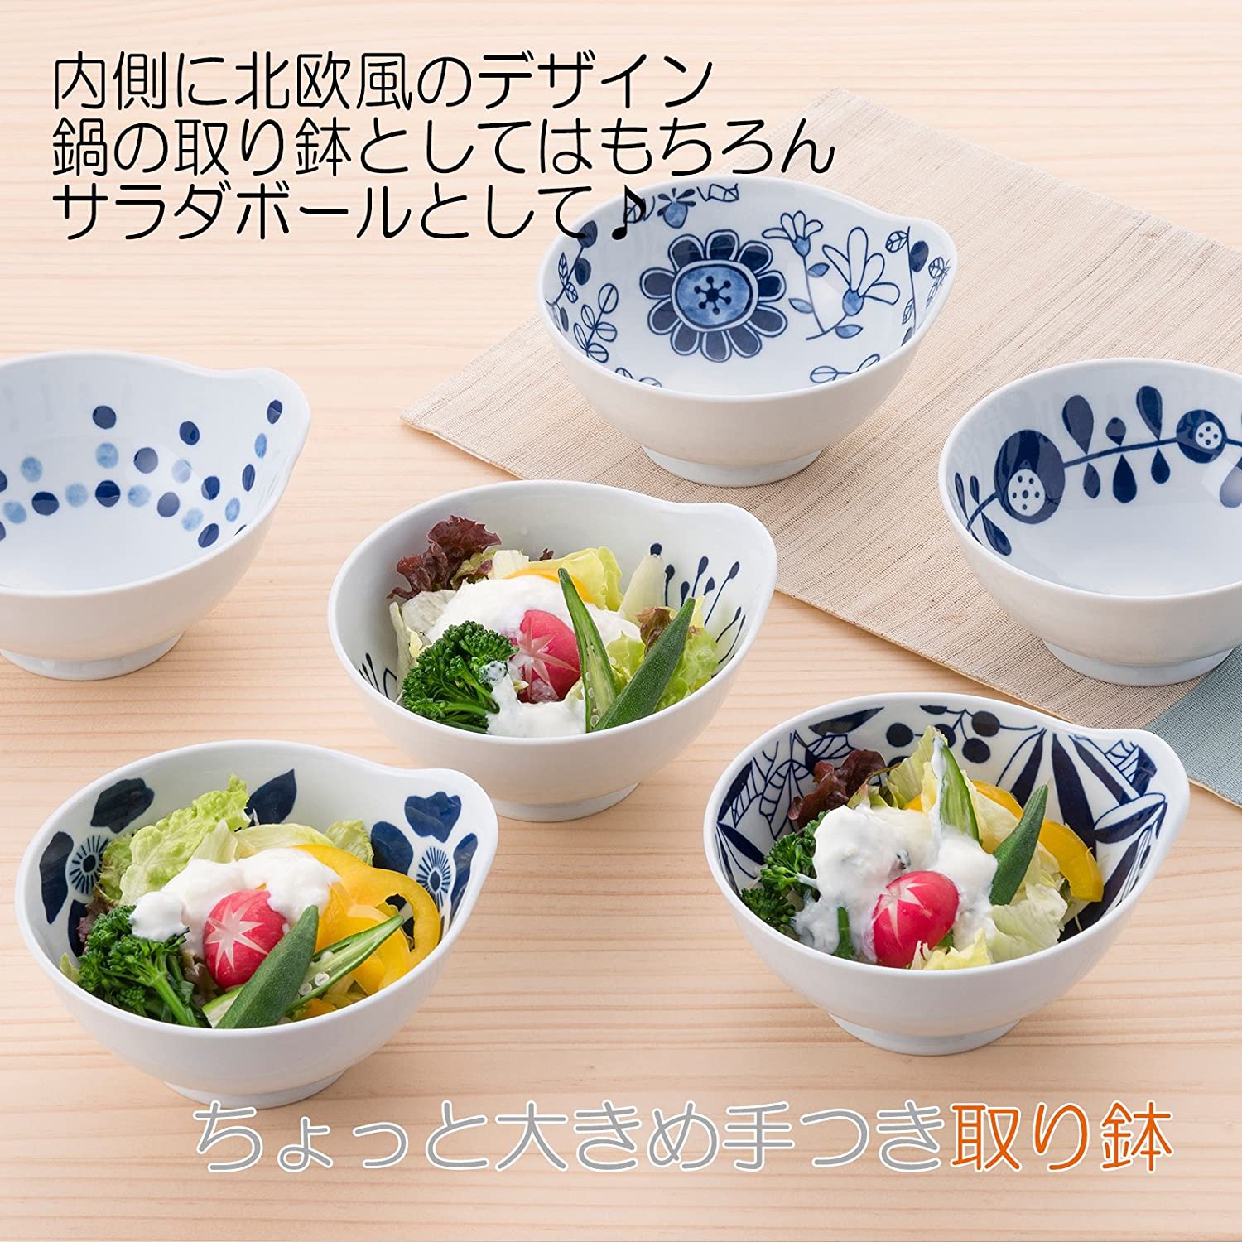 CtoC JAPAN(シートゥーシー ジャパン) 少し大きめの 持ち手つき 小鉢の商品画像サムネ3 